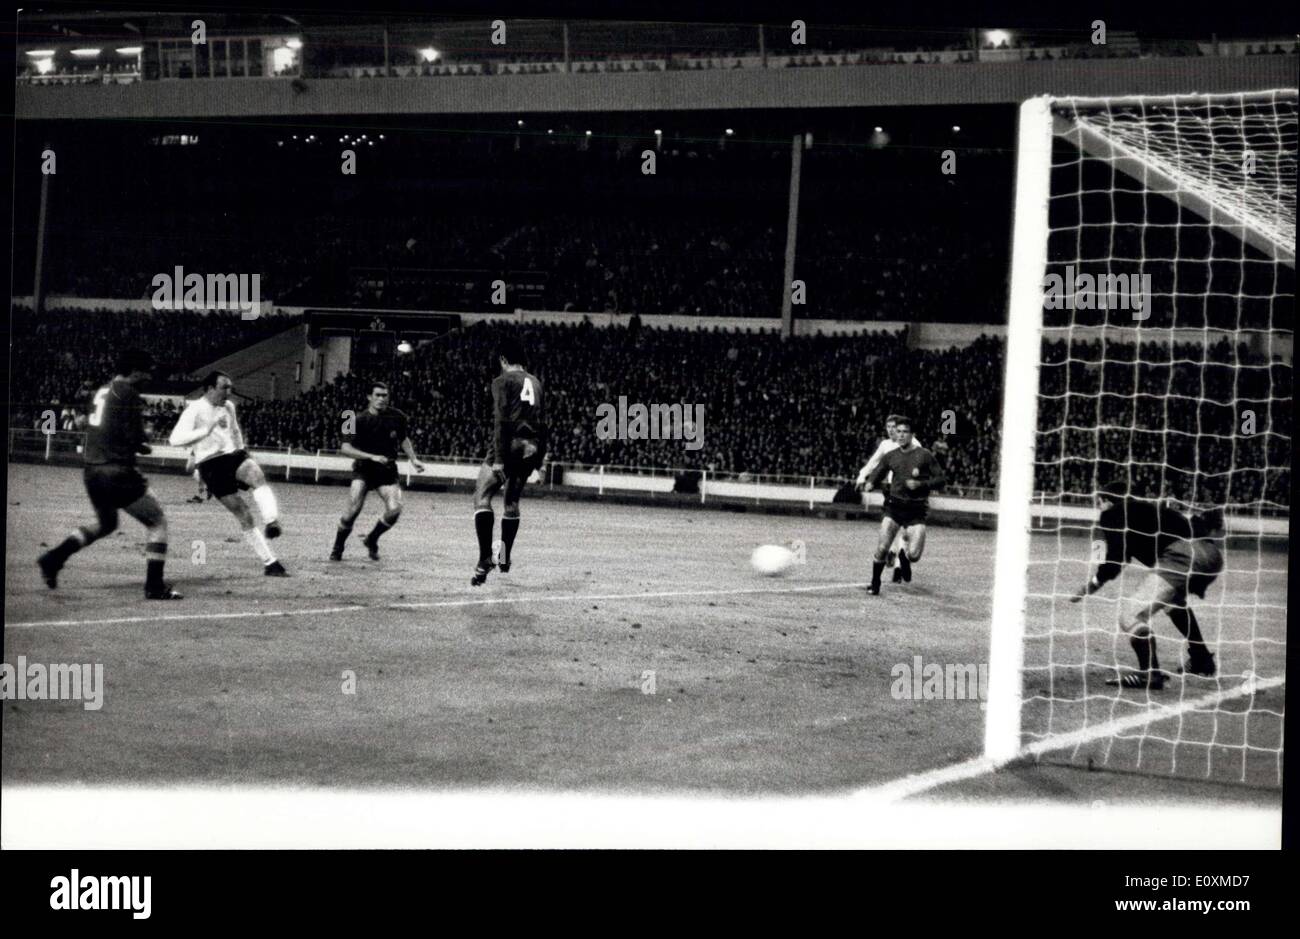 25 mai 1967 - L'Angleterre a battu l'Espagne 2-0 à Wembley. Dans  l'International match de football à Wembley hier soir l'Angleterre battre  l'Espagne 2-0. Photo : Jimmy Greaves vu l'Angleterre notation fist